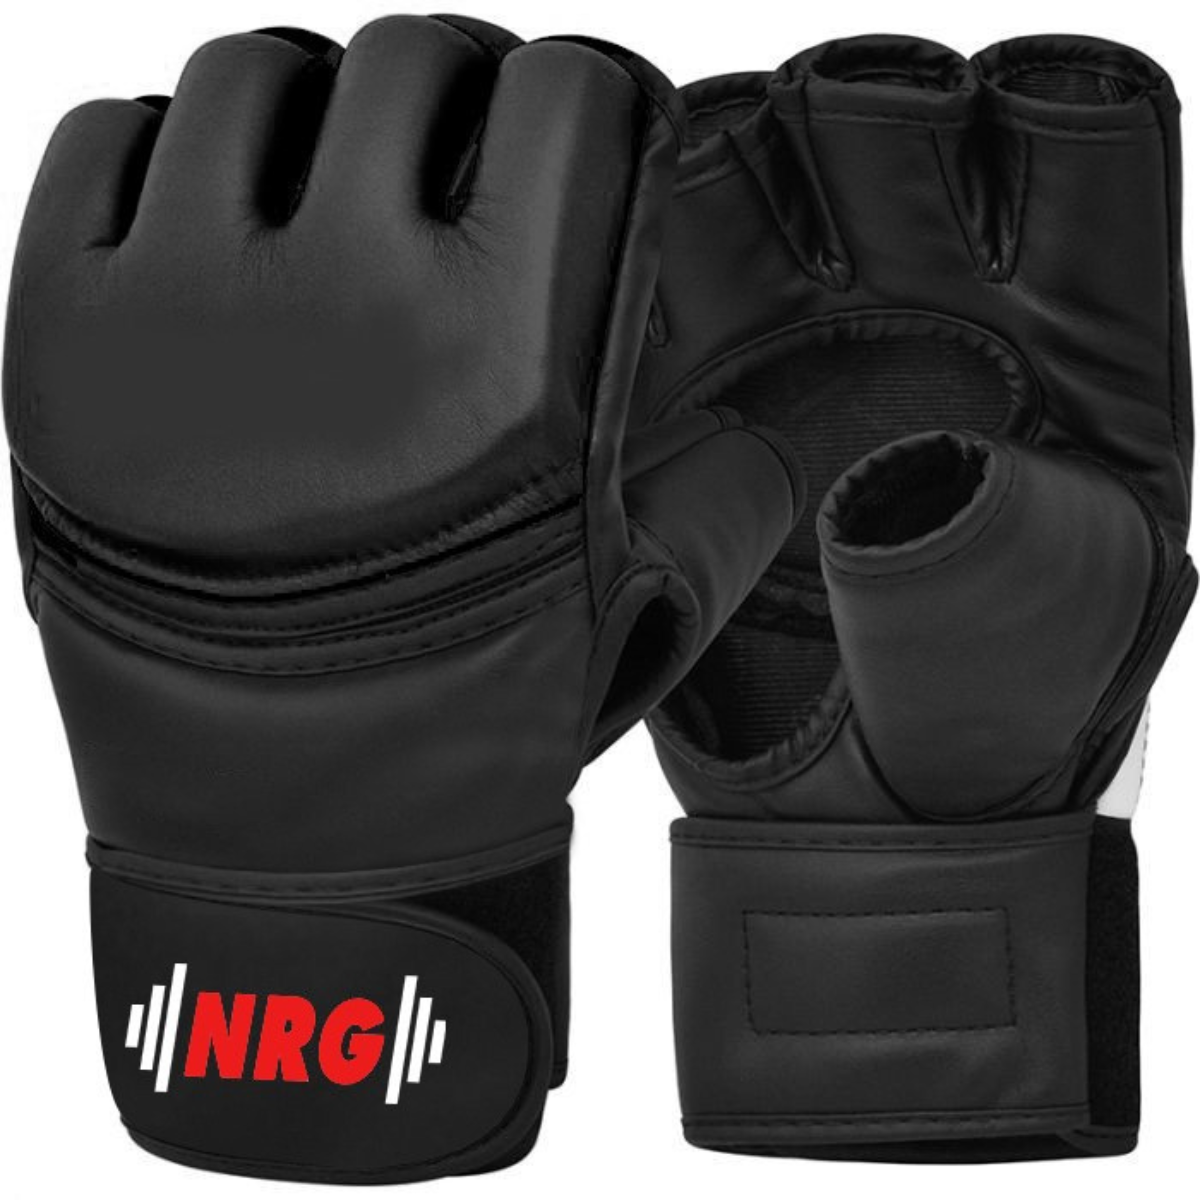 NRG WELLNESS F12 MMA MMA handschuhe, M Schwarz